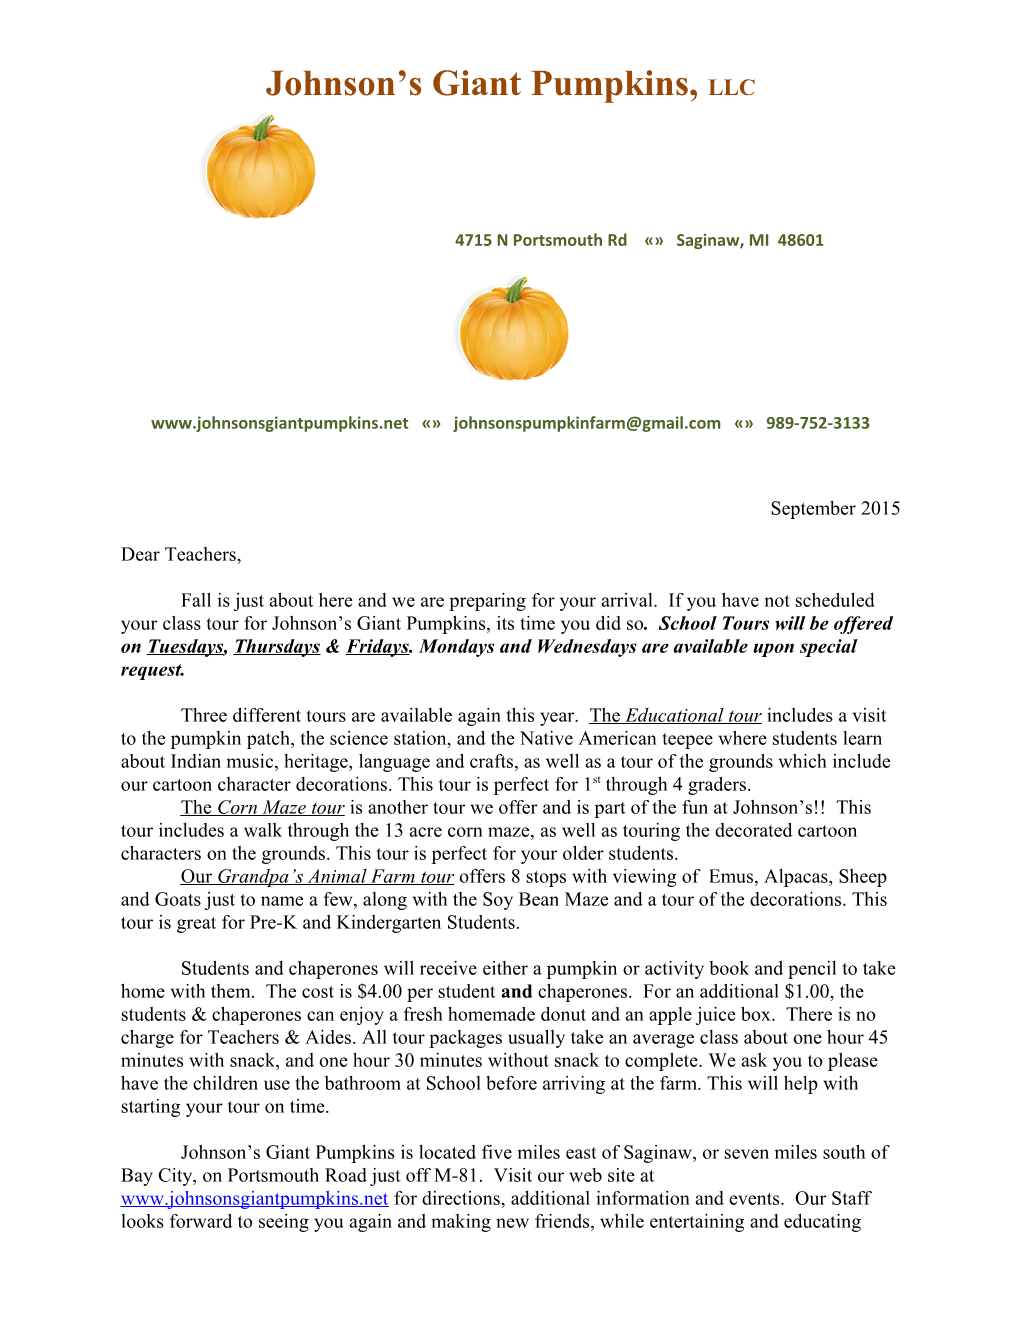 Johnson S Giant Pumpkins, LLC